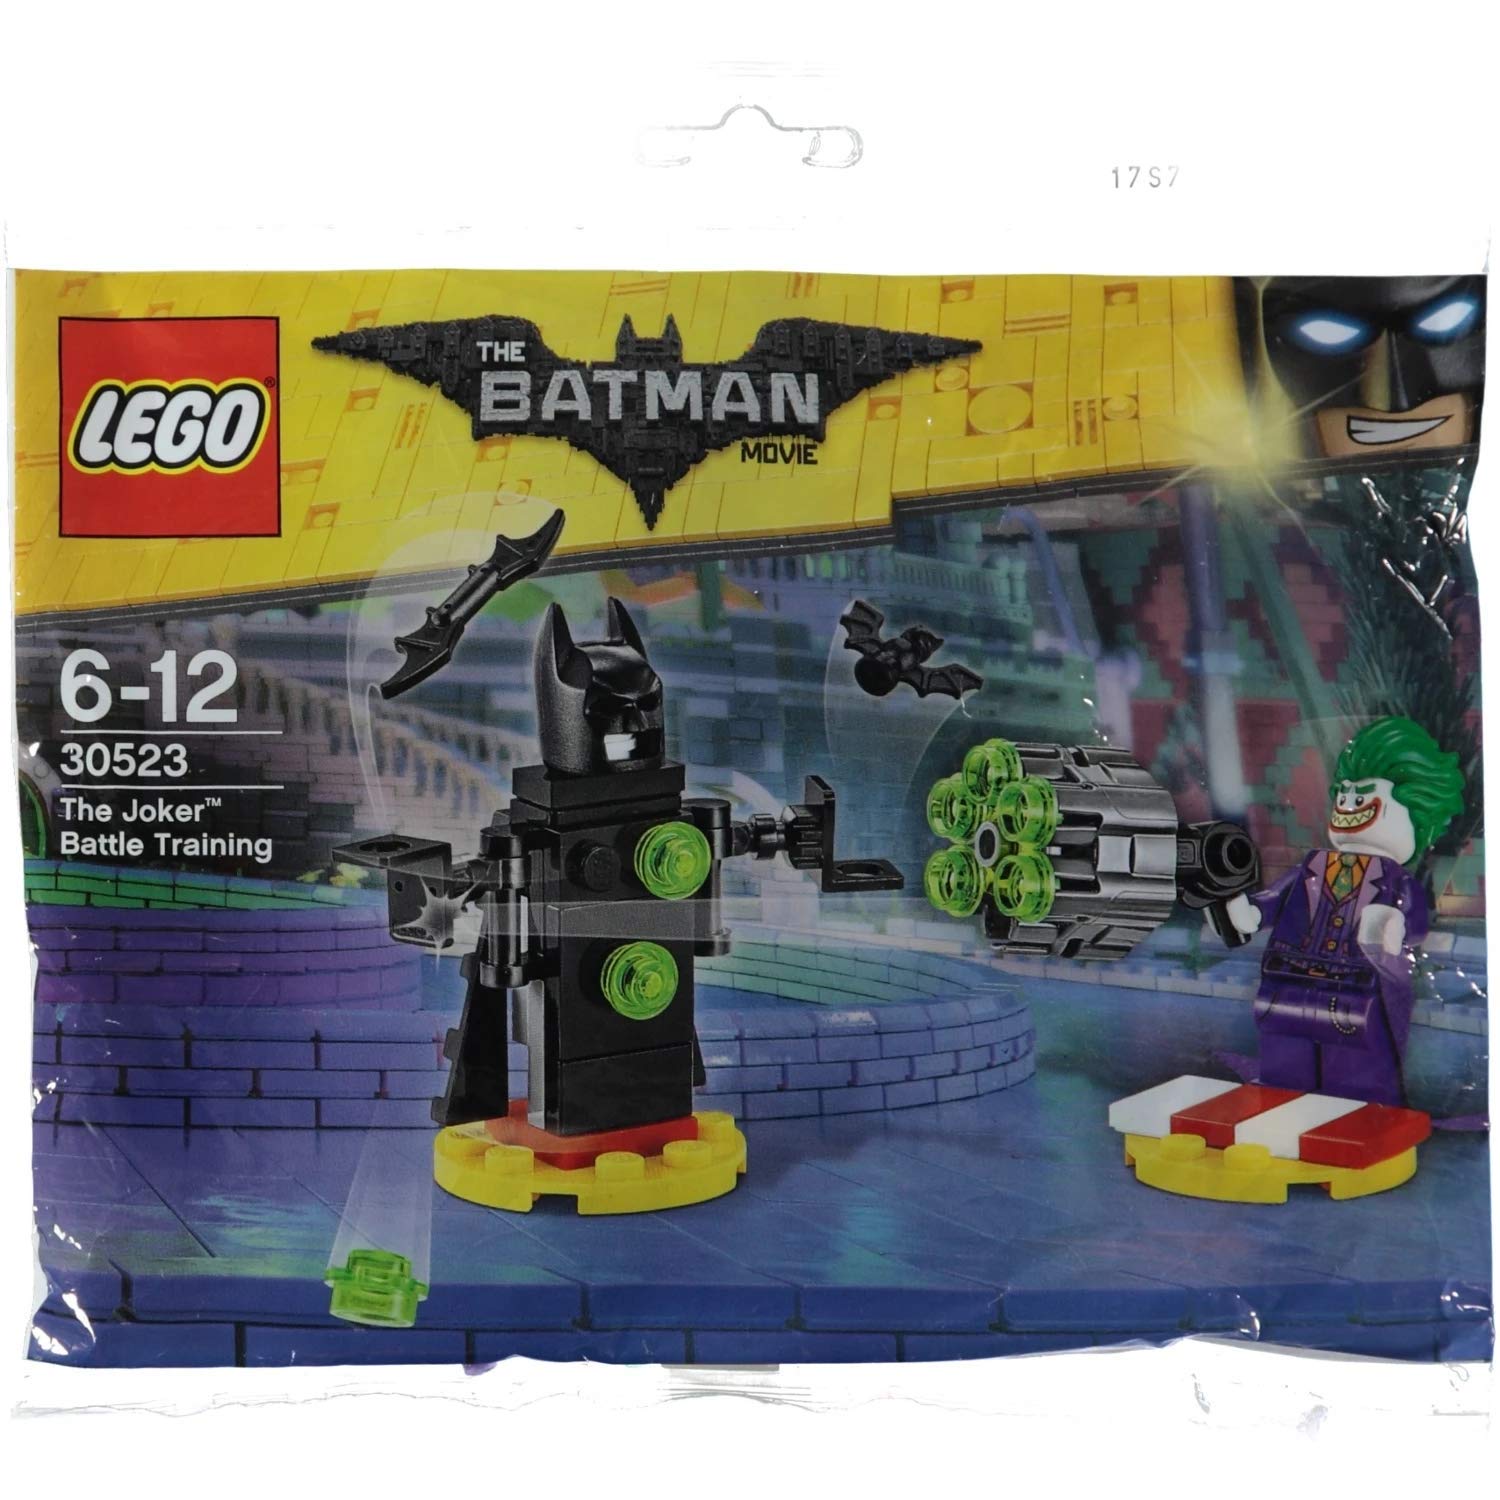 LEGO 30523 Batman Movie The Joker Battle Training polybag MINI set